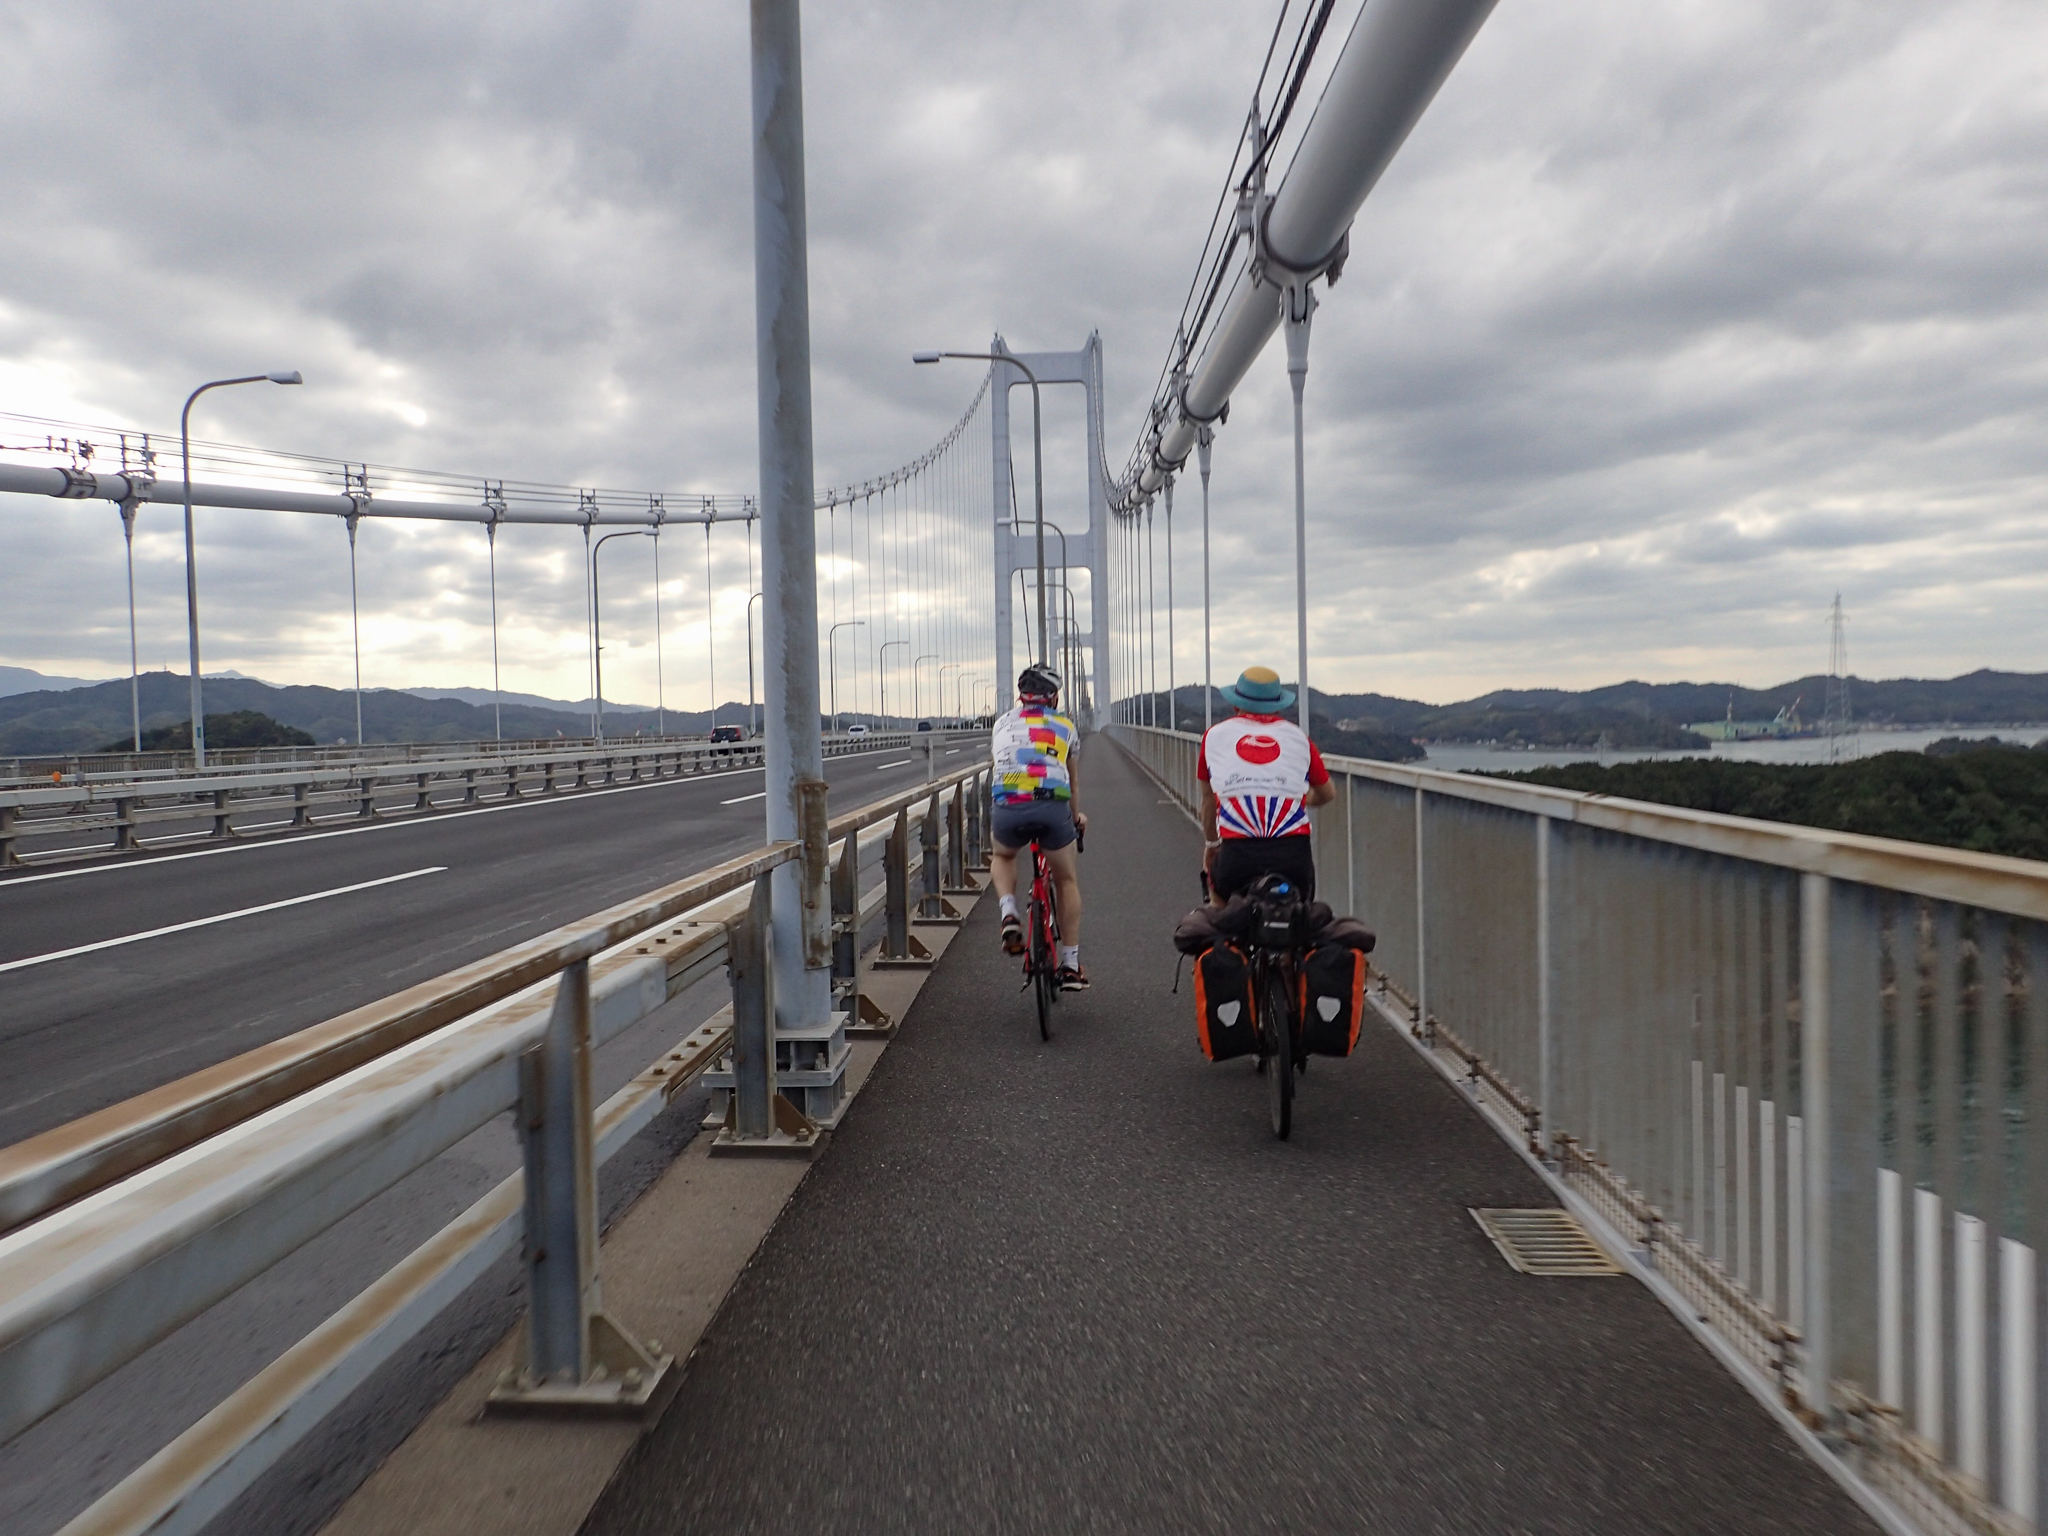 On the Kurushima bridge